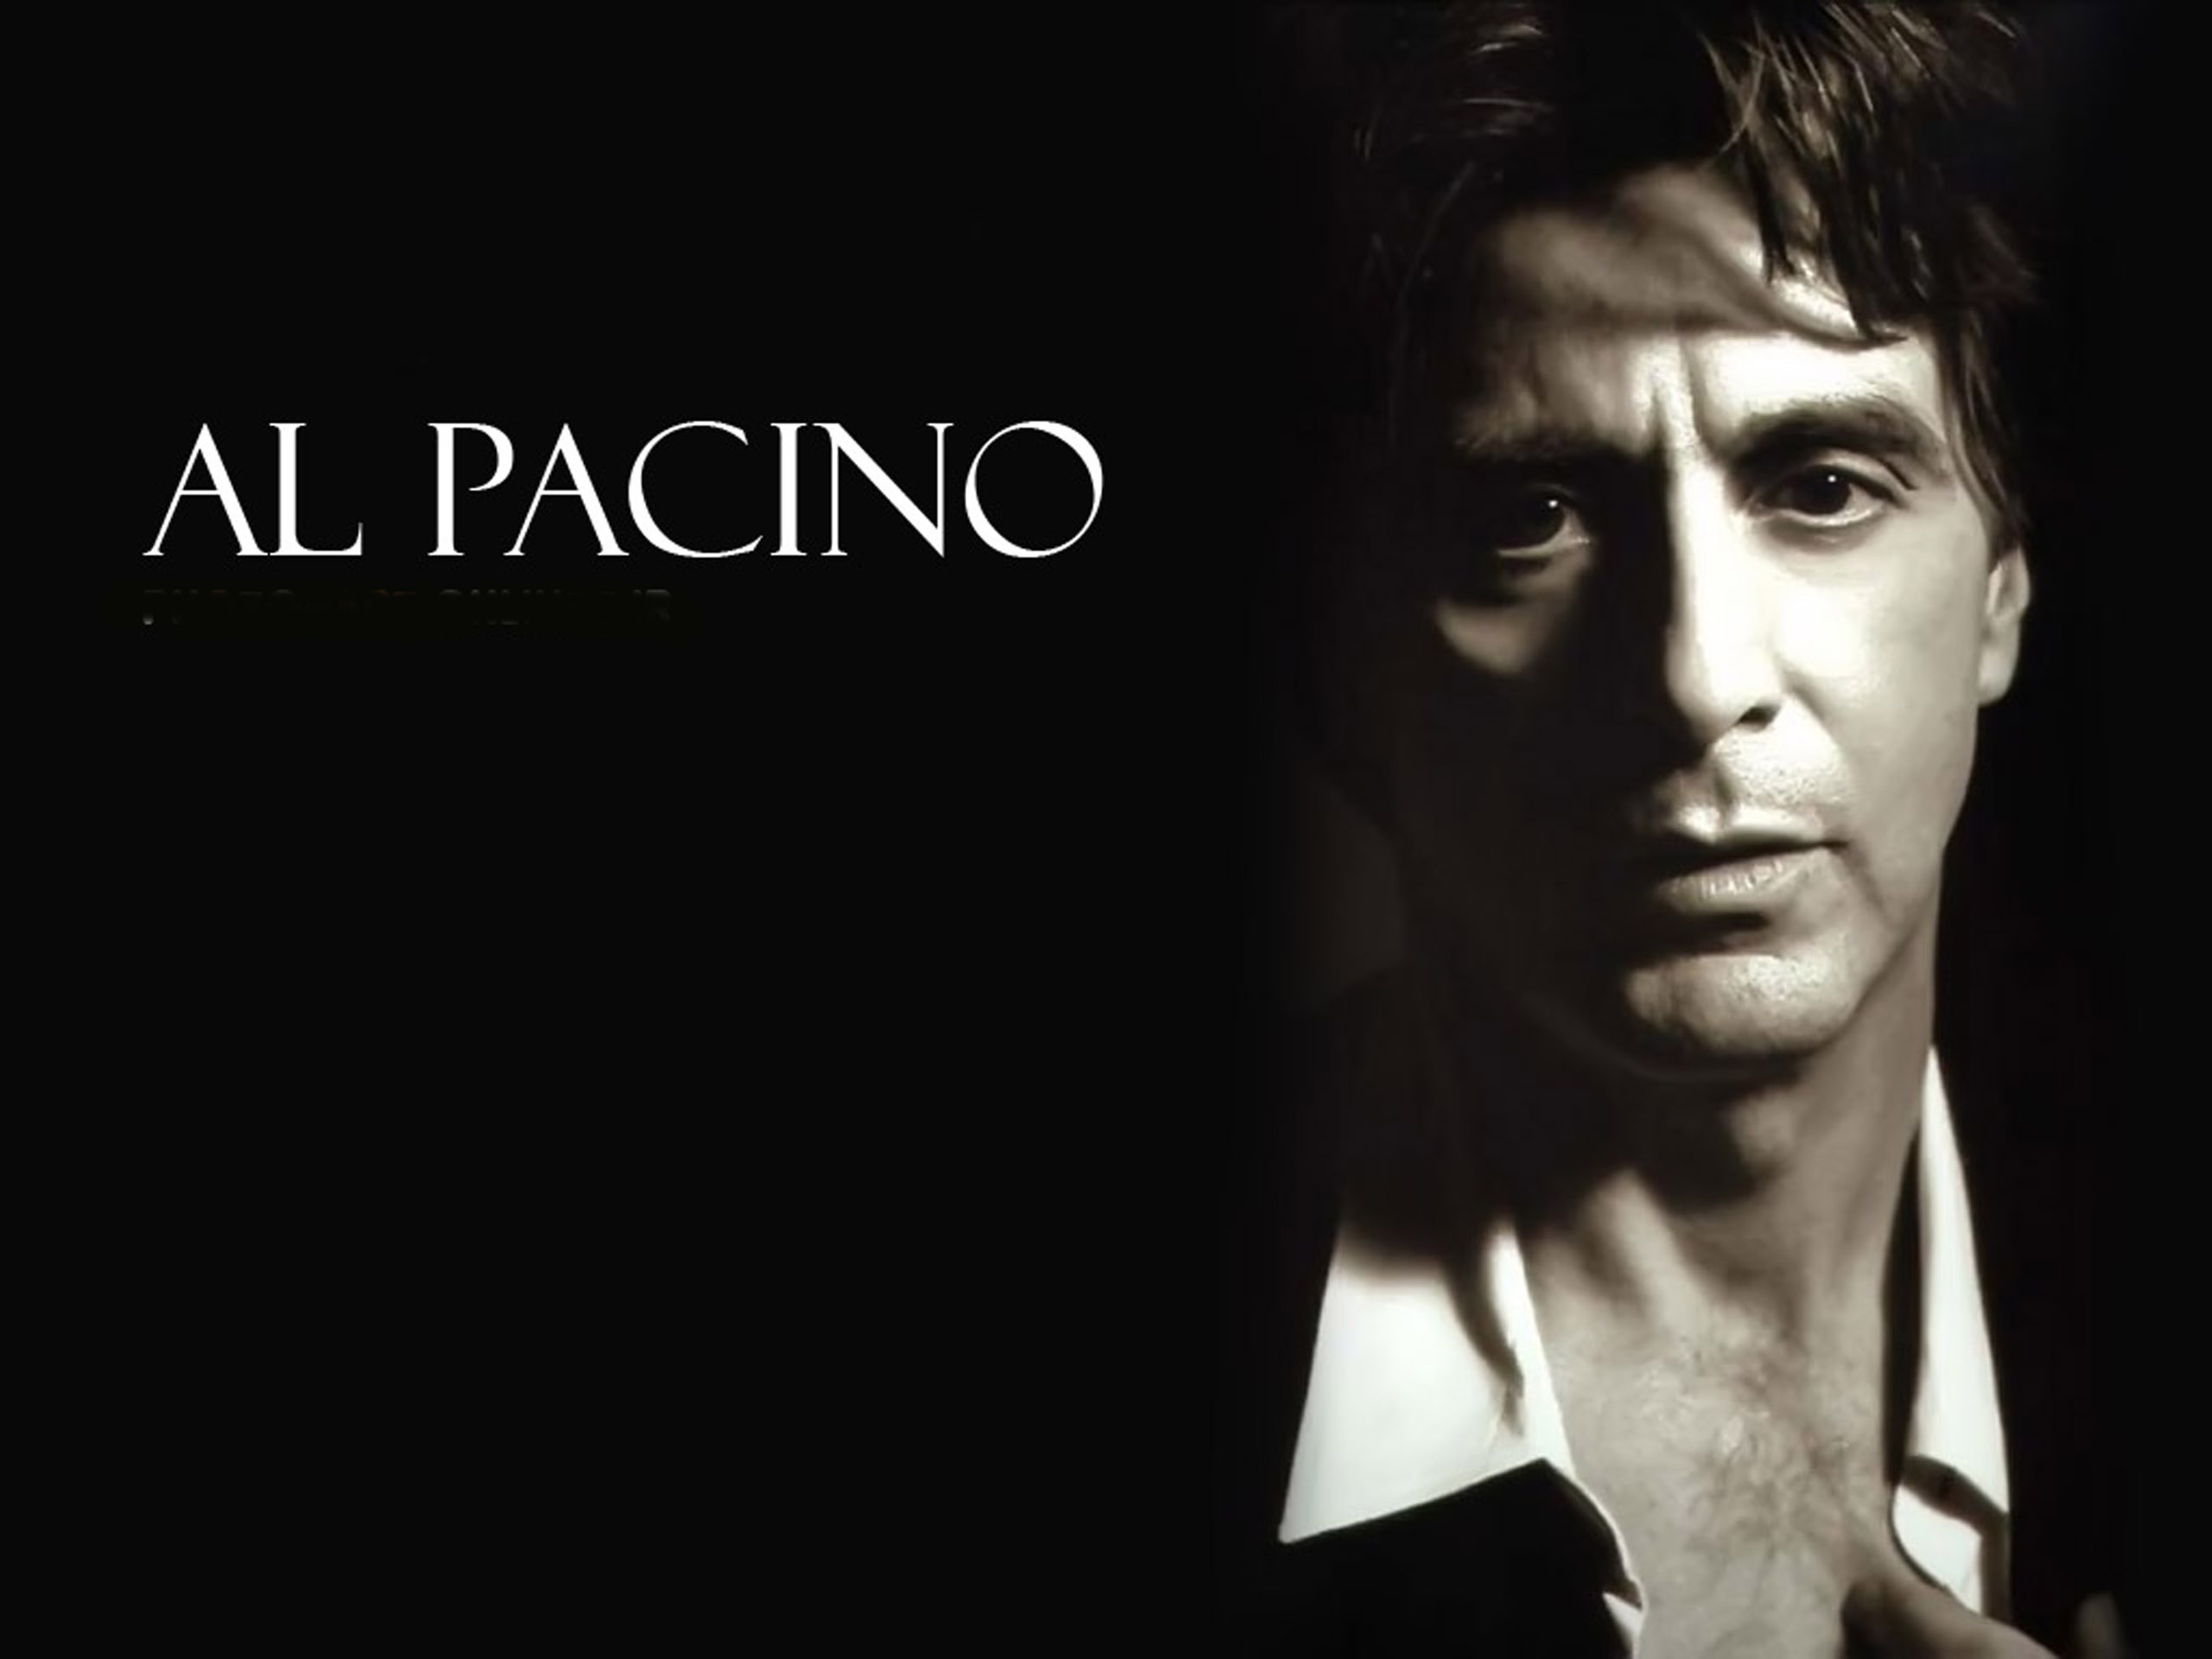 HD wallpaper, Scarface Wallpaper, Desktop Hd Al Pacino Background Image, 2560X1920 Hd Desktop, Al Pacino, Michelle Pfeiffer, Al Pacino Wallpapers